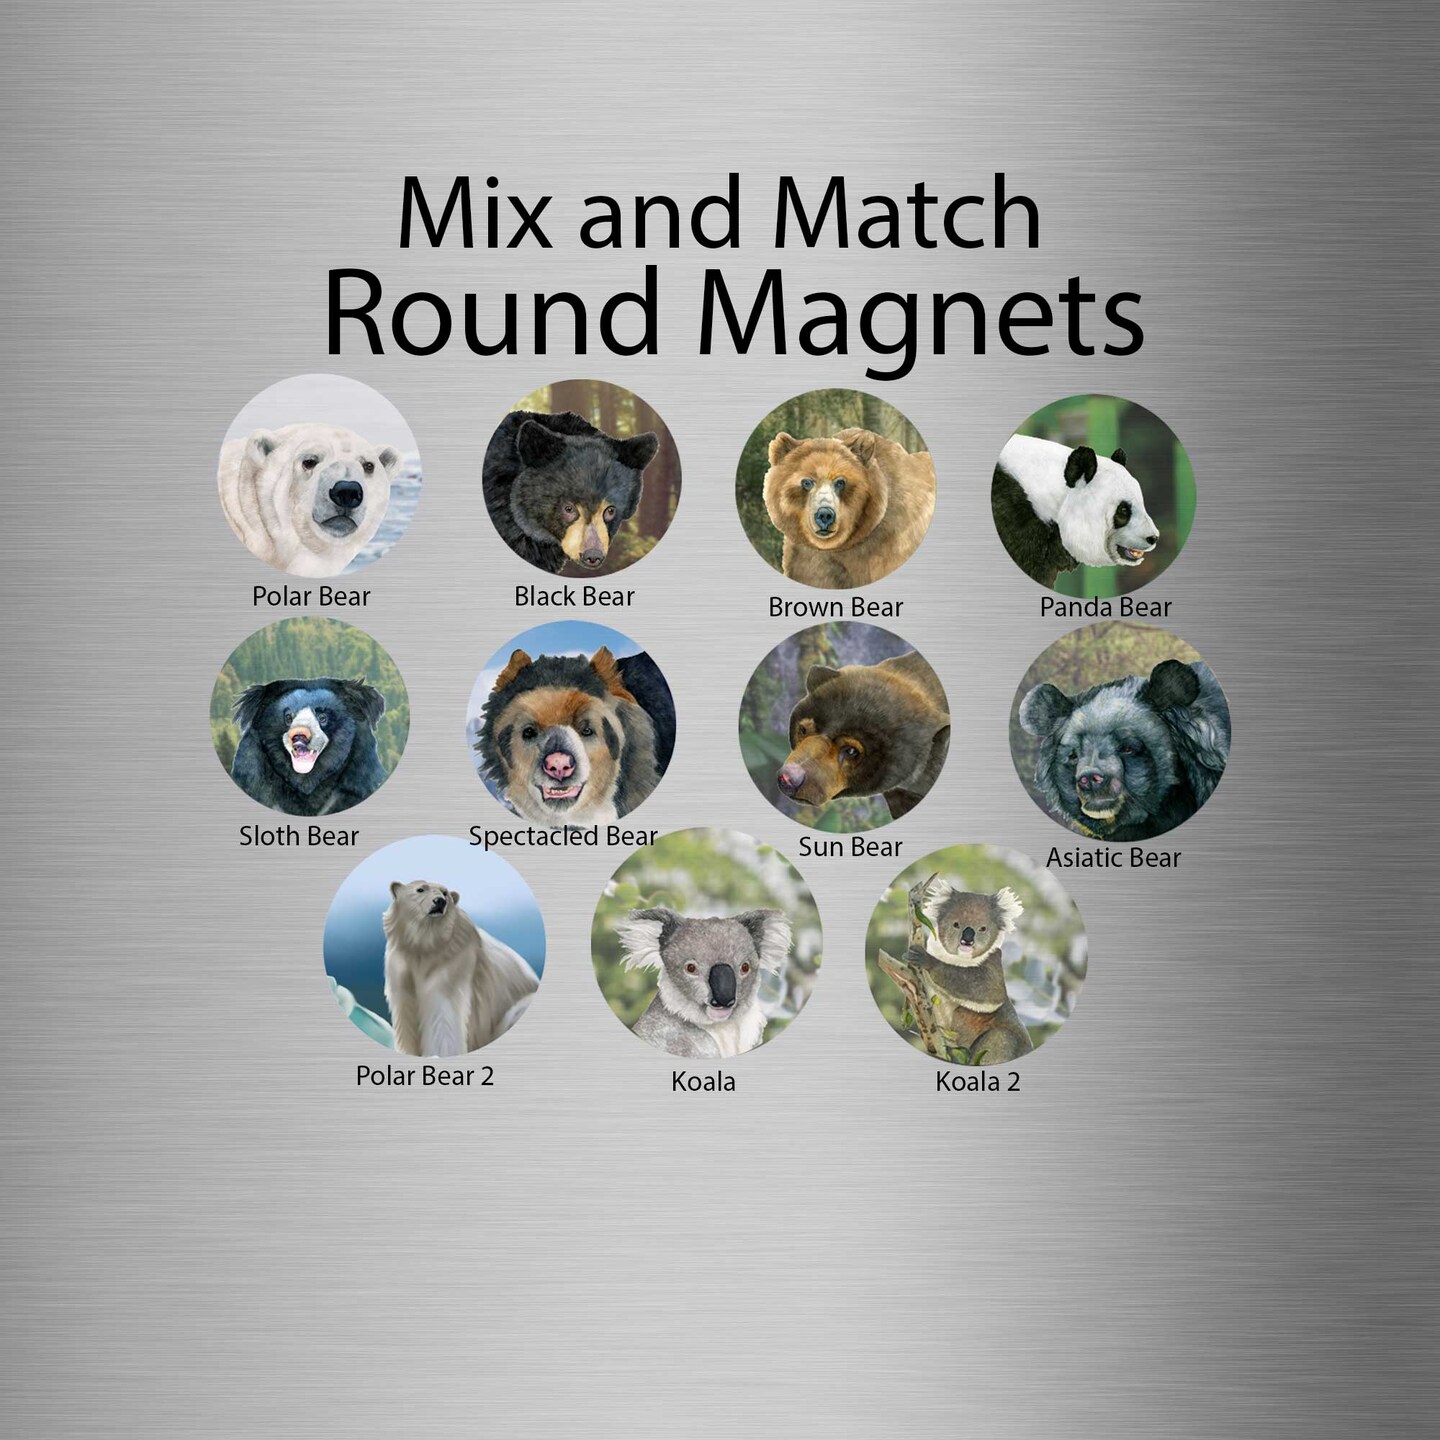 1.25 Round Magnets